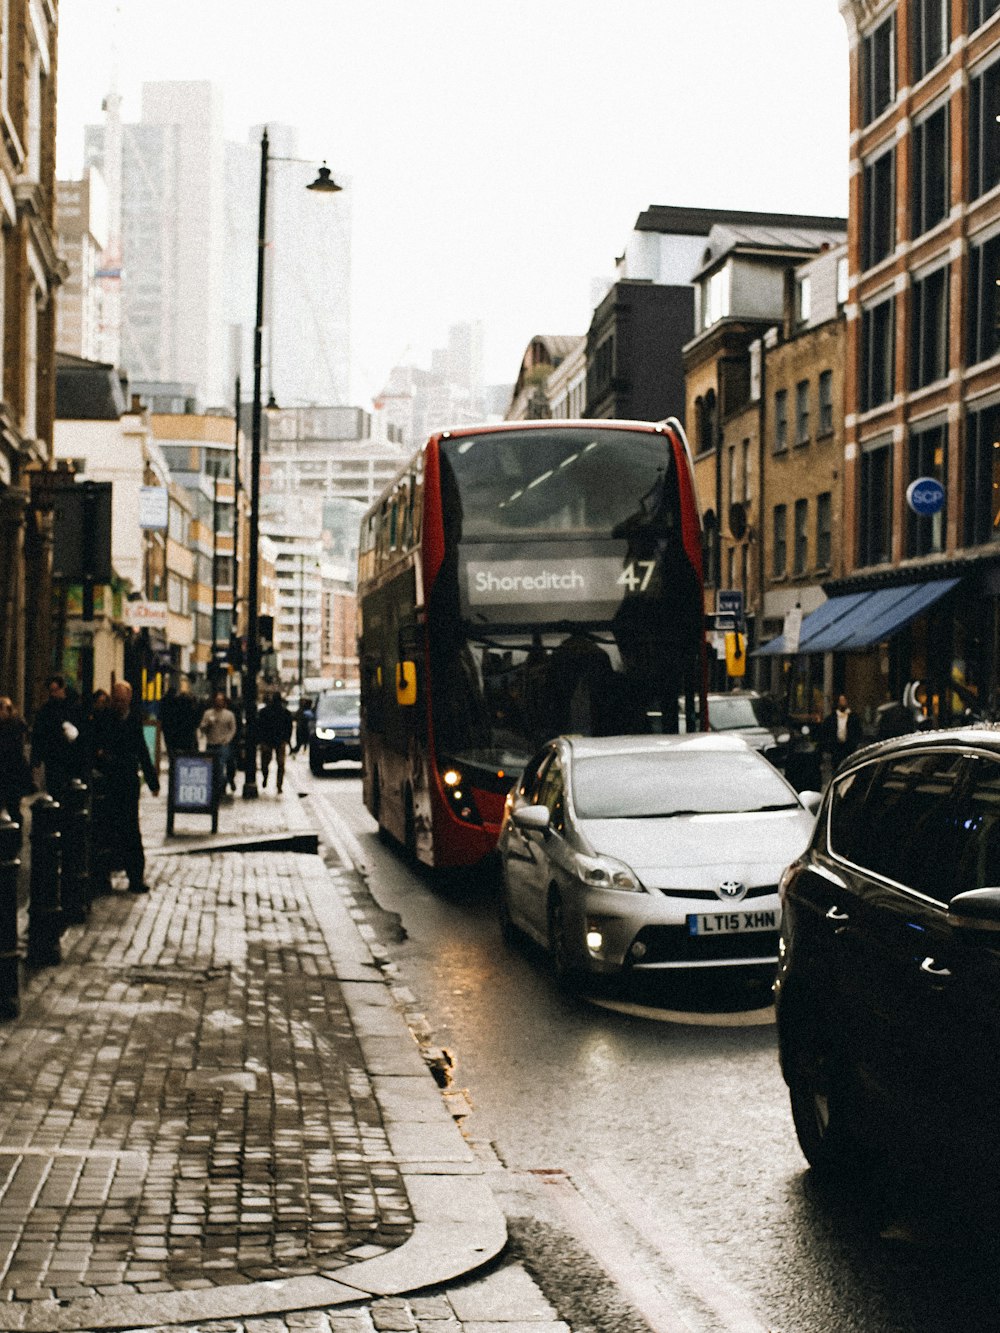 a double decker bus driving down a city street